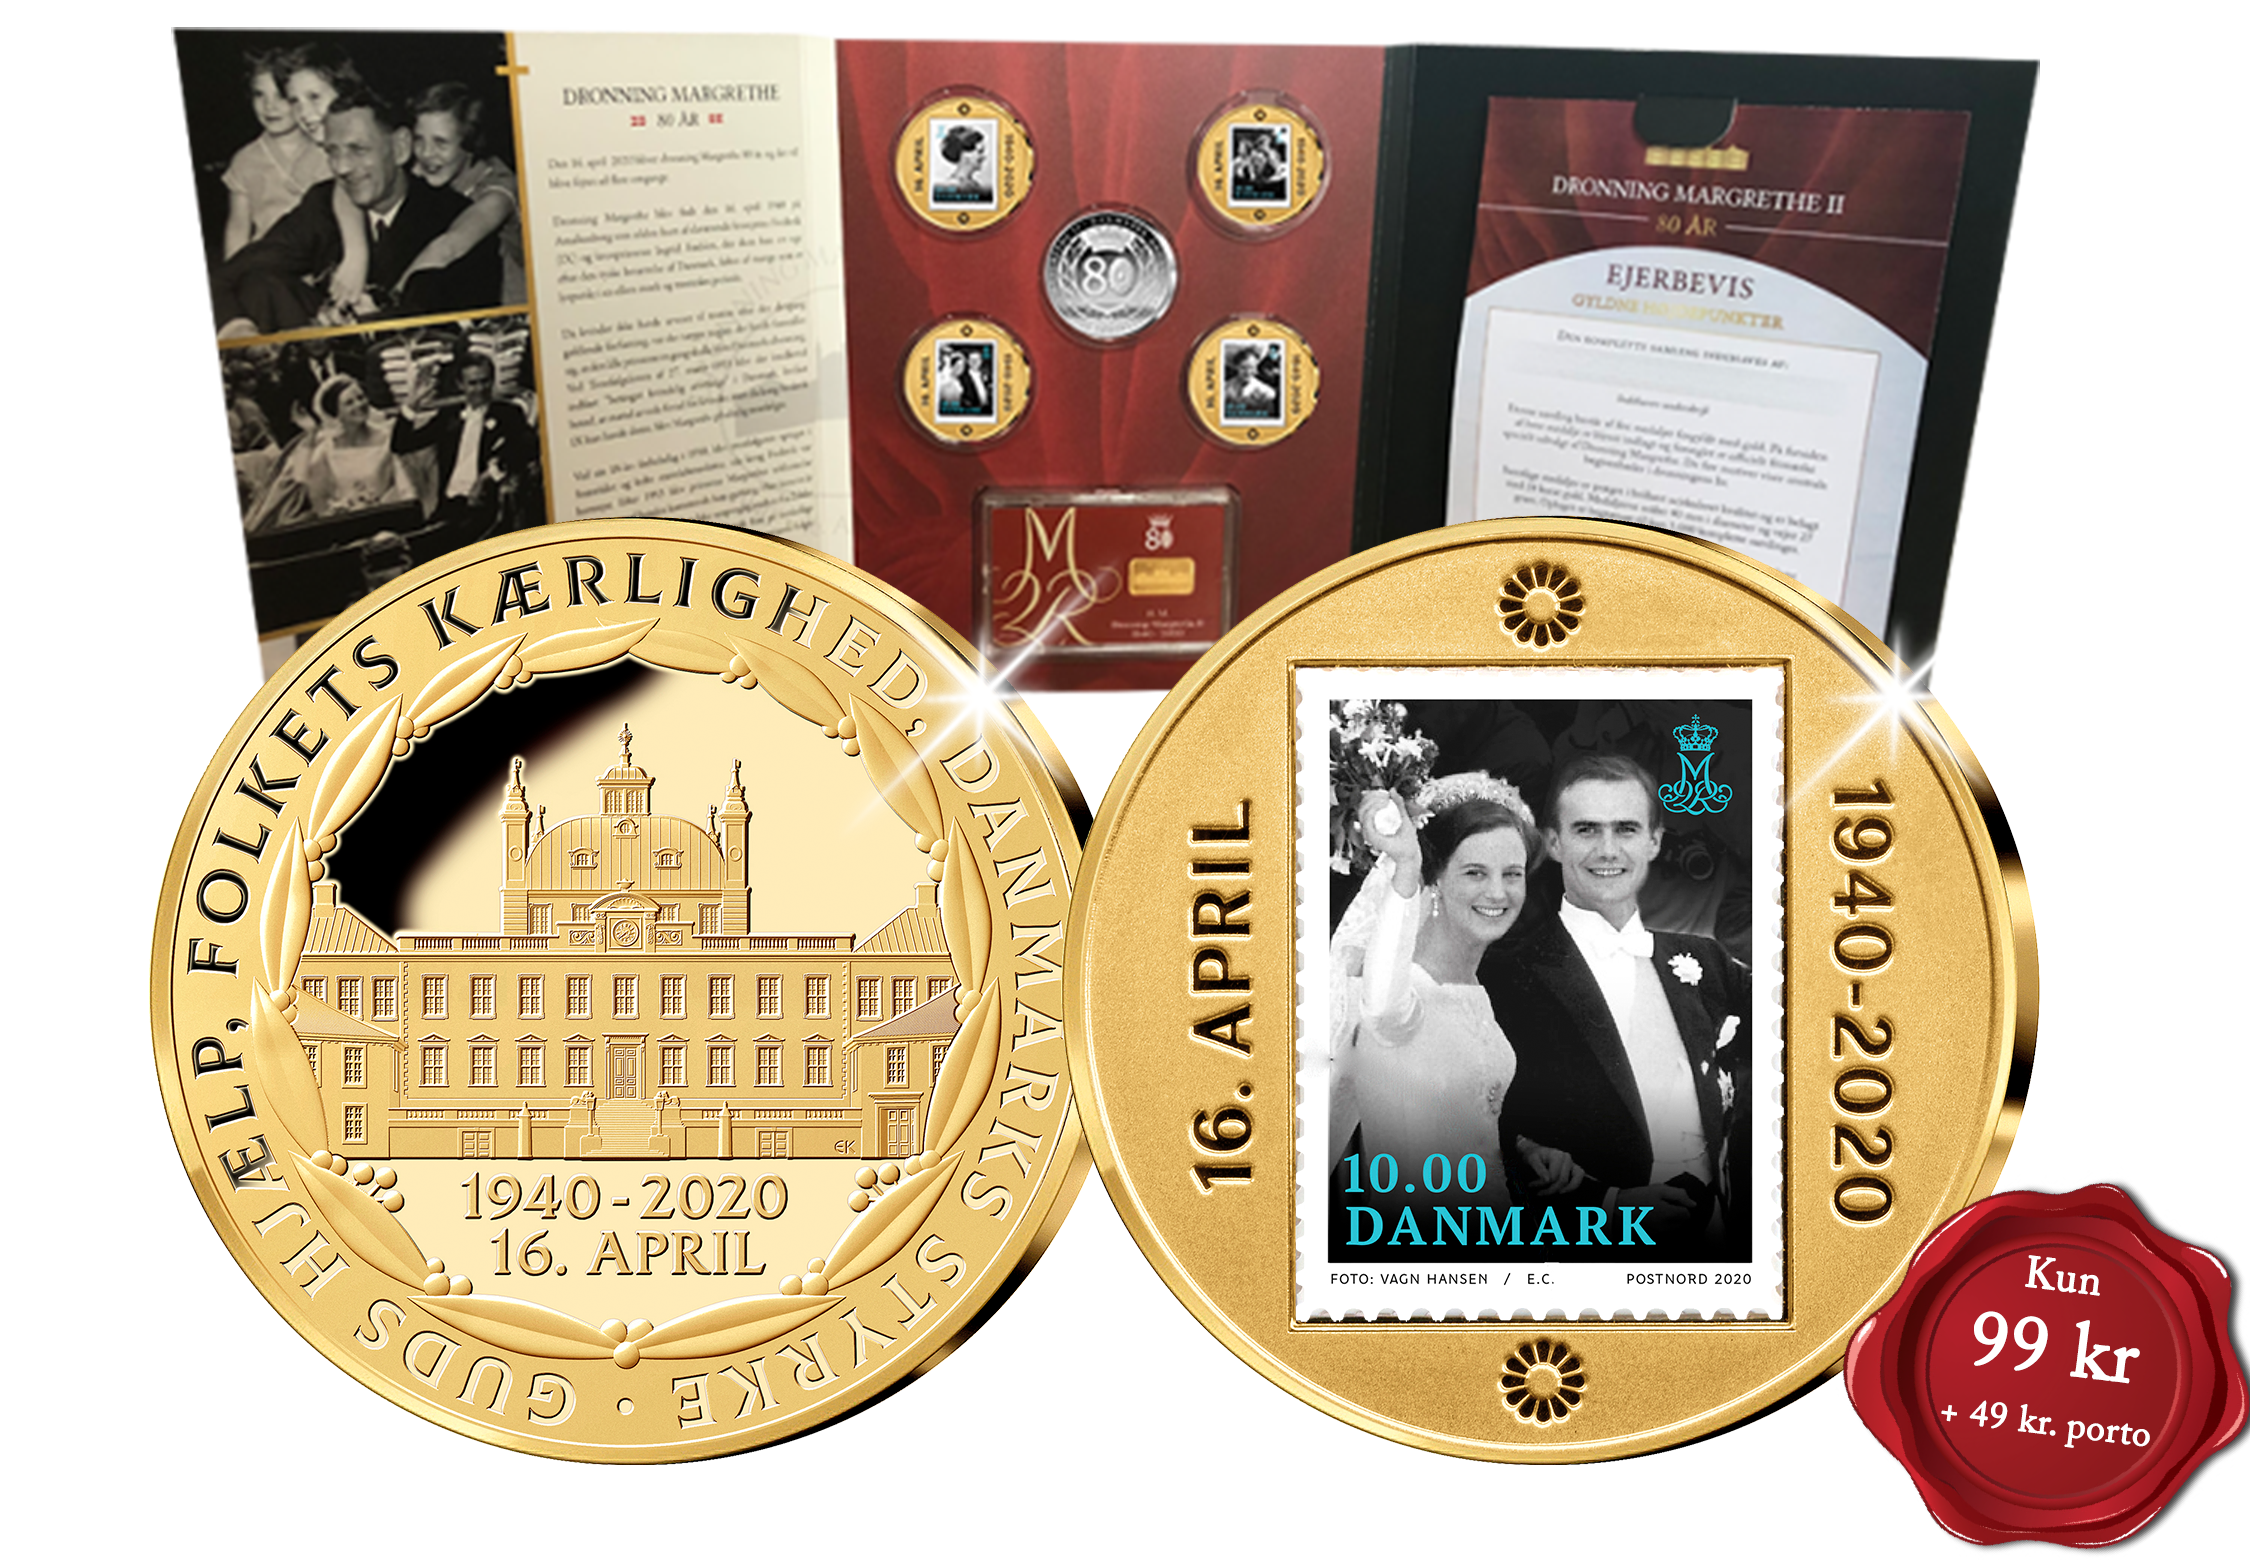 Dronning Margrethe 80 år - Gyldne højdepunkter 1940-2020